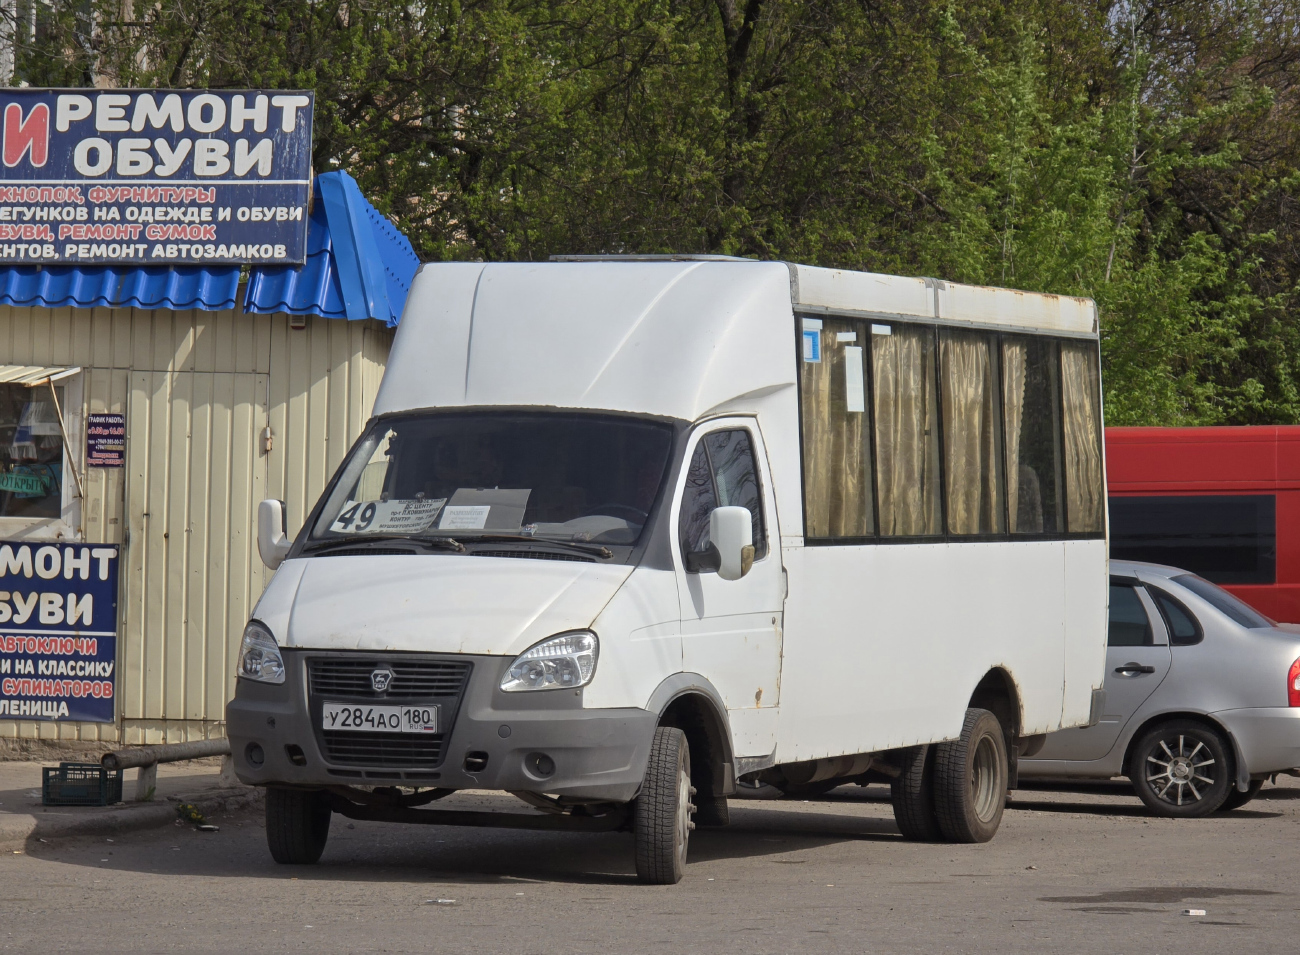 Donetsk, Ruta 20 №: У 284 АО 180